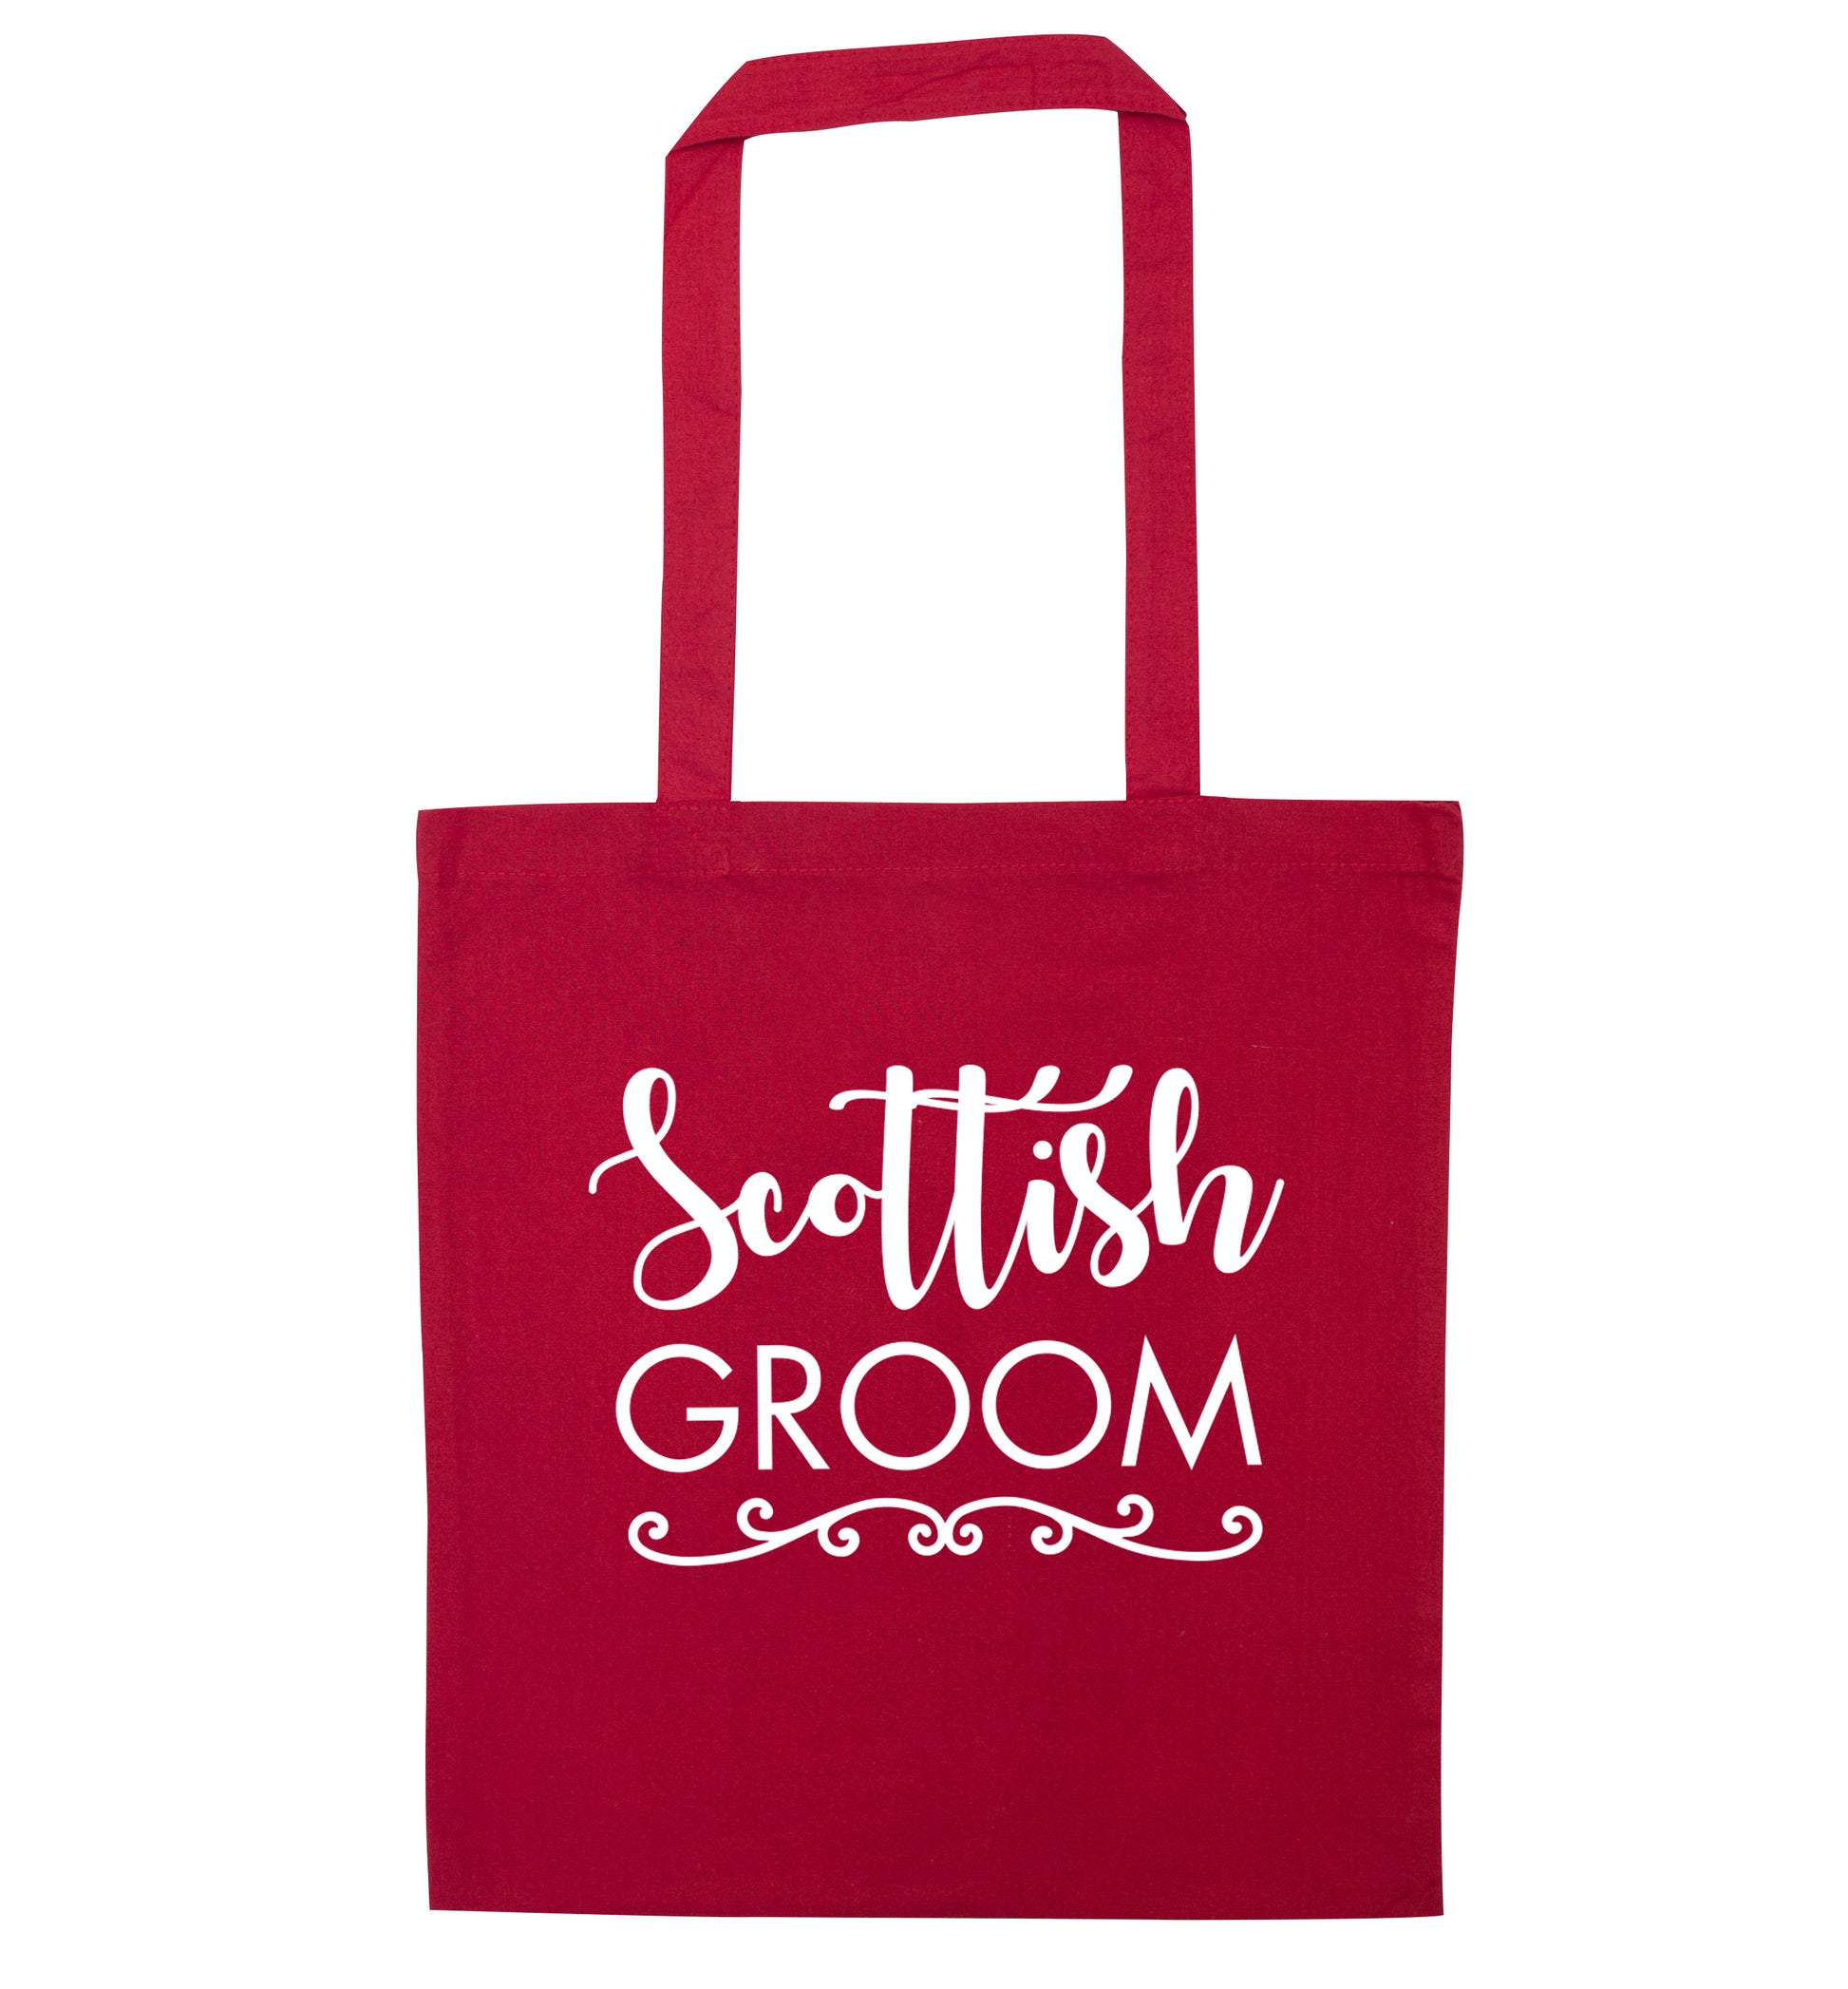 Scottish groom red tote bag